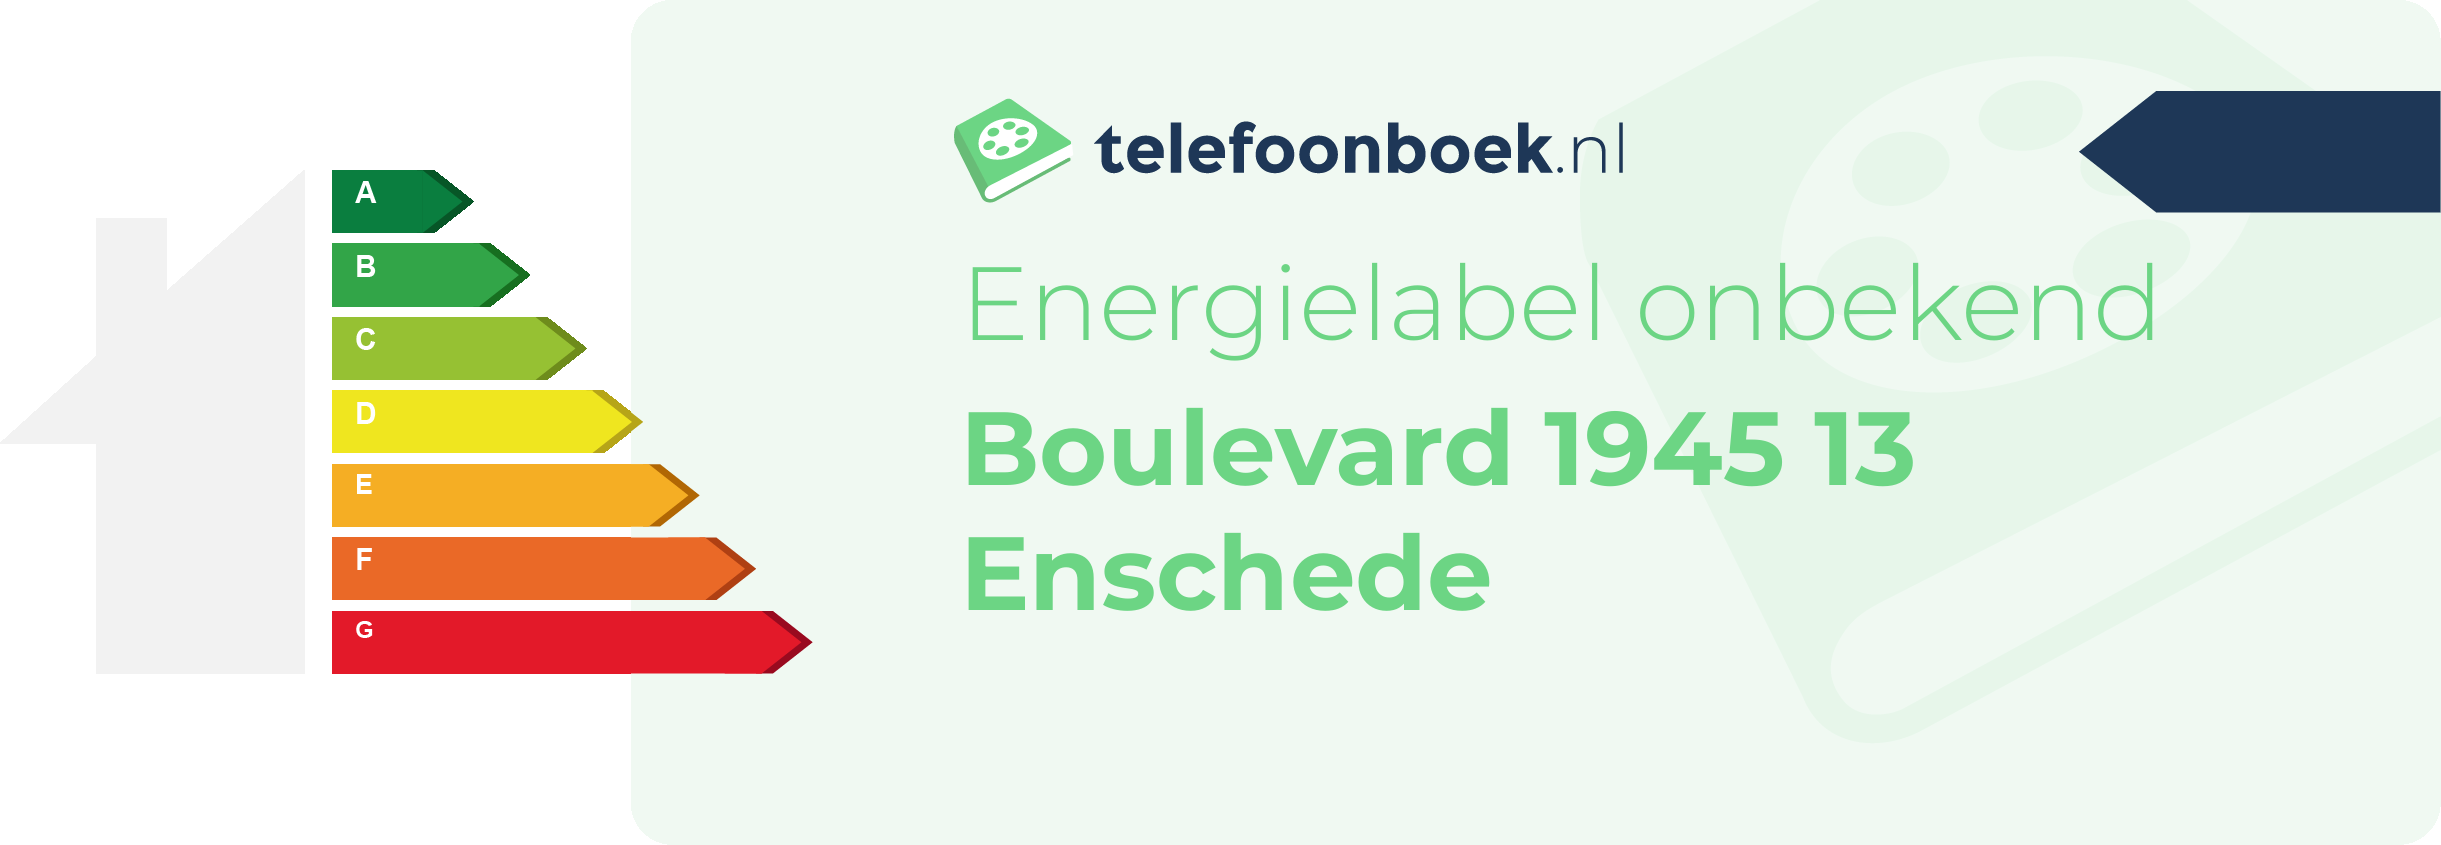 Energielabel Boulevard 1945 13 Enschede